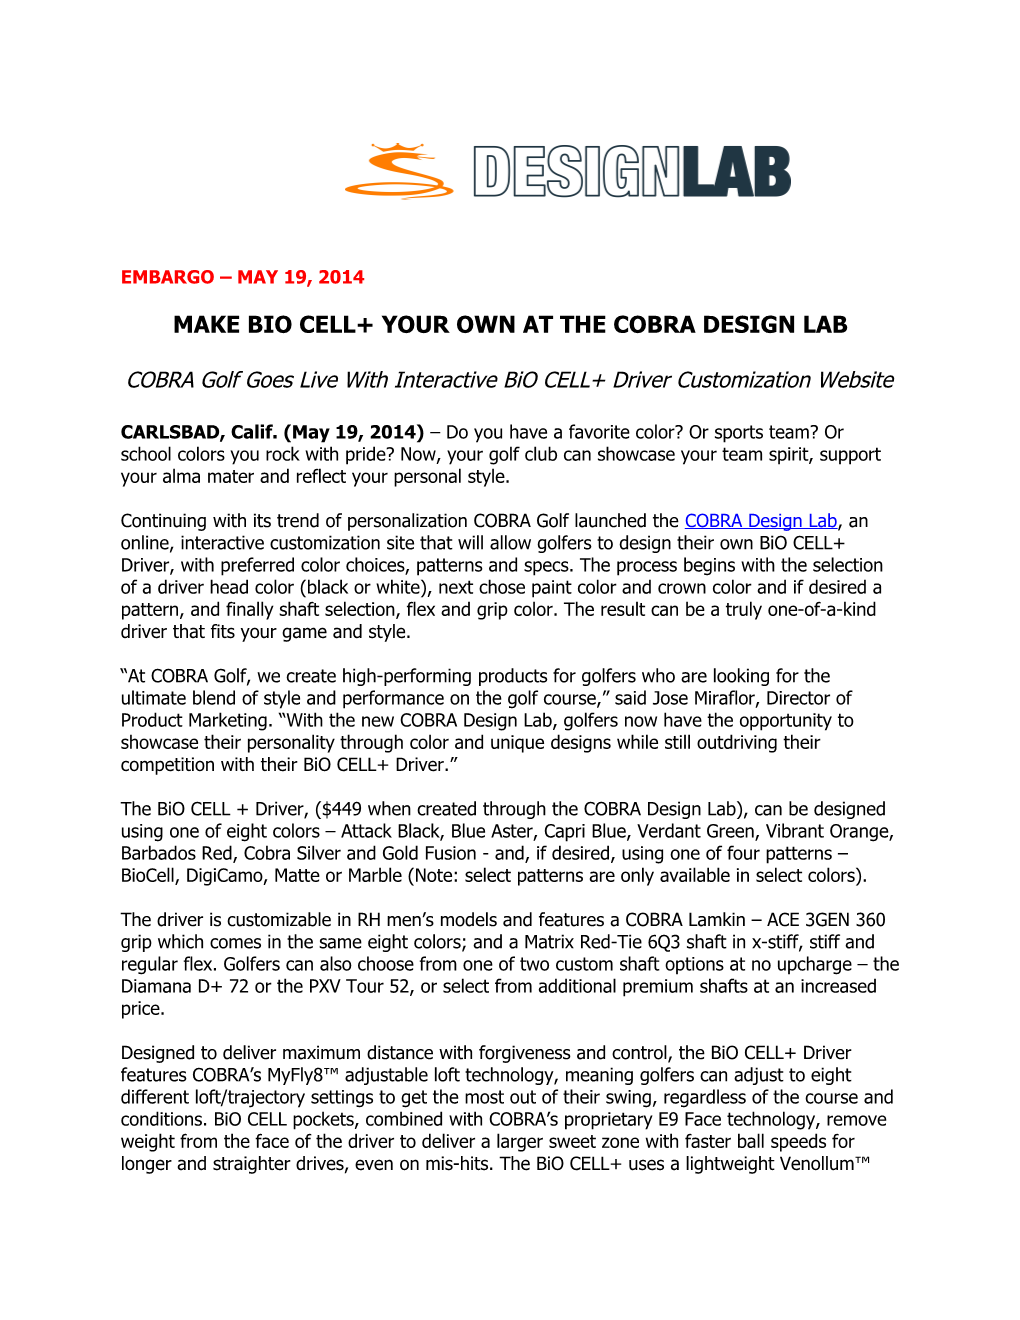 Make Bio Cell+ Your Ownat the Cobra Design Lab